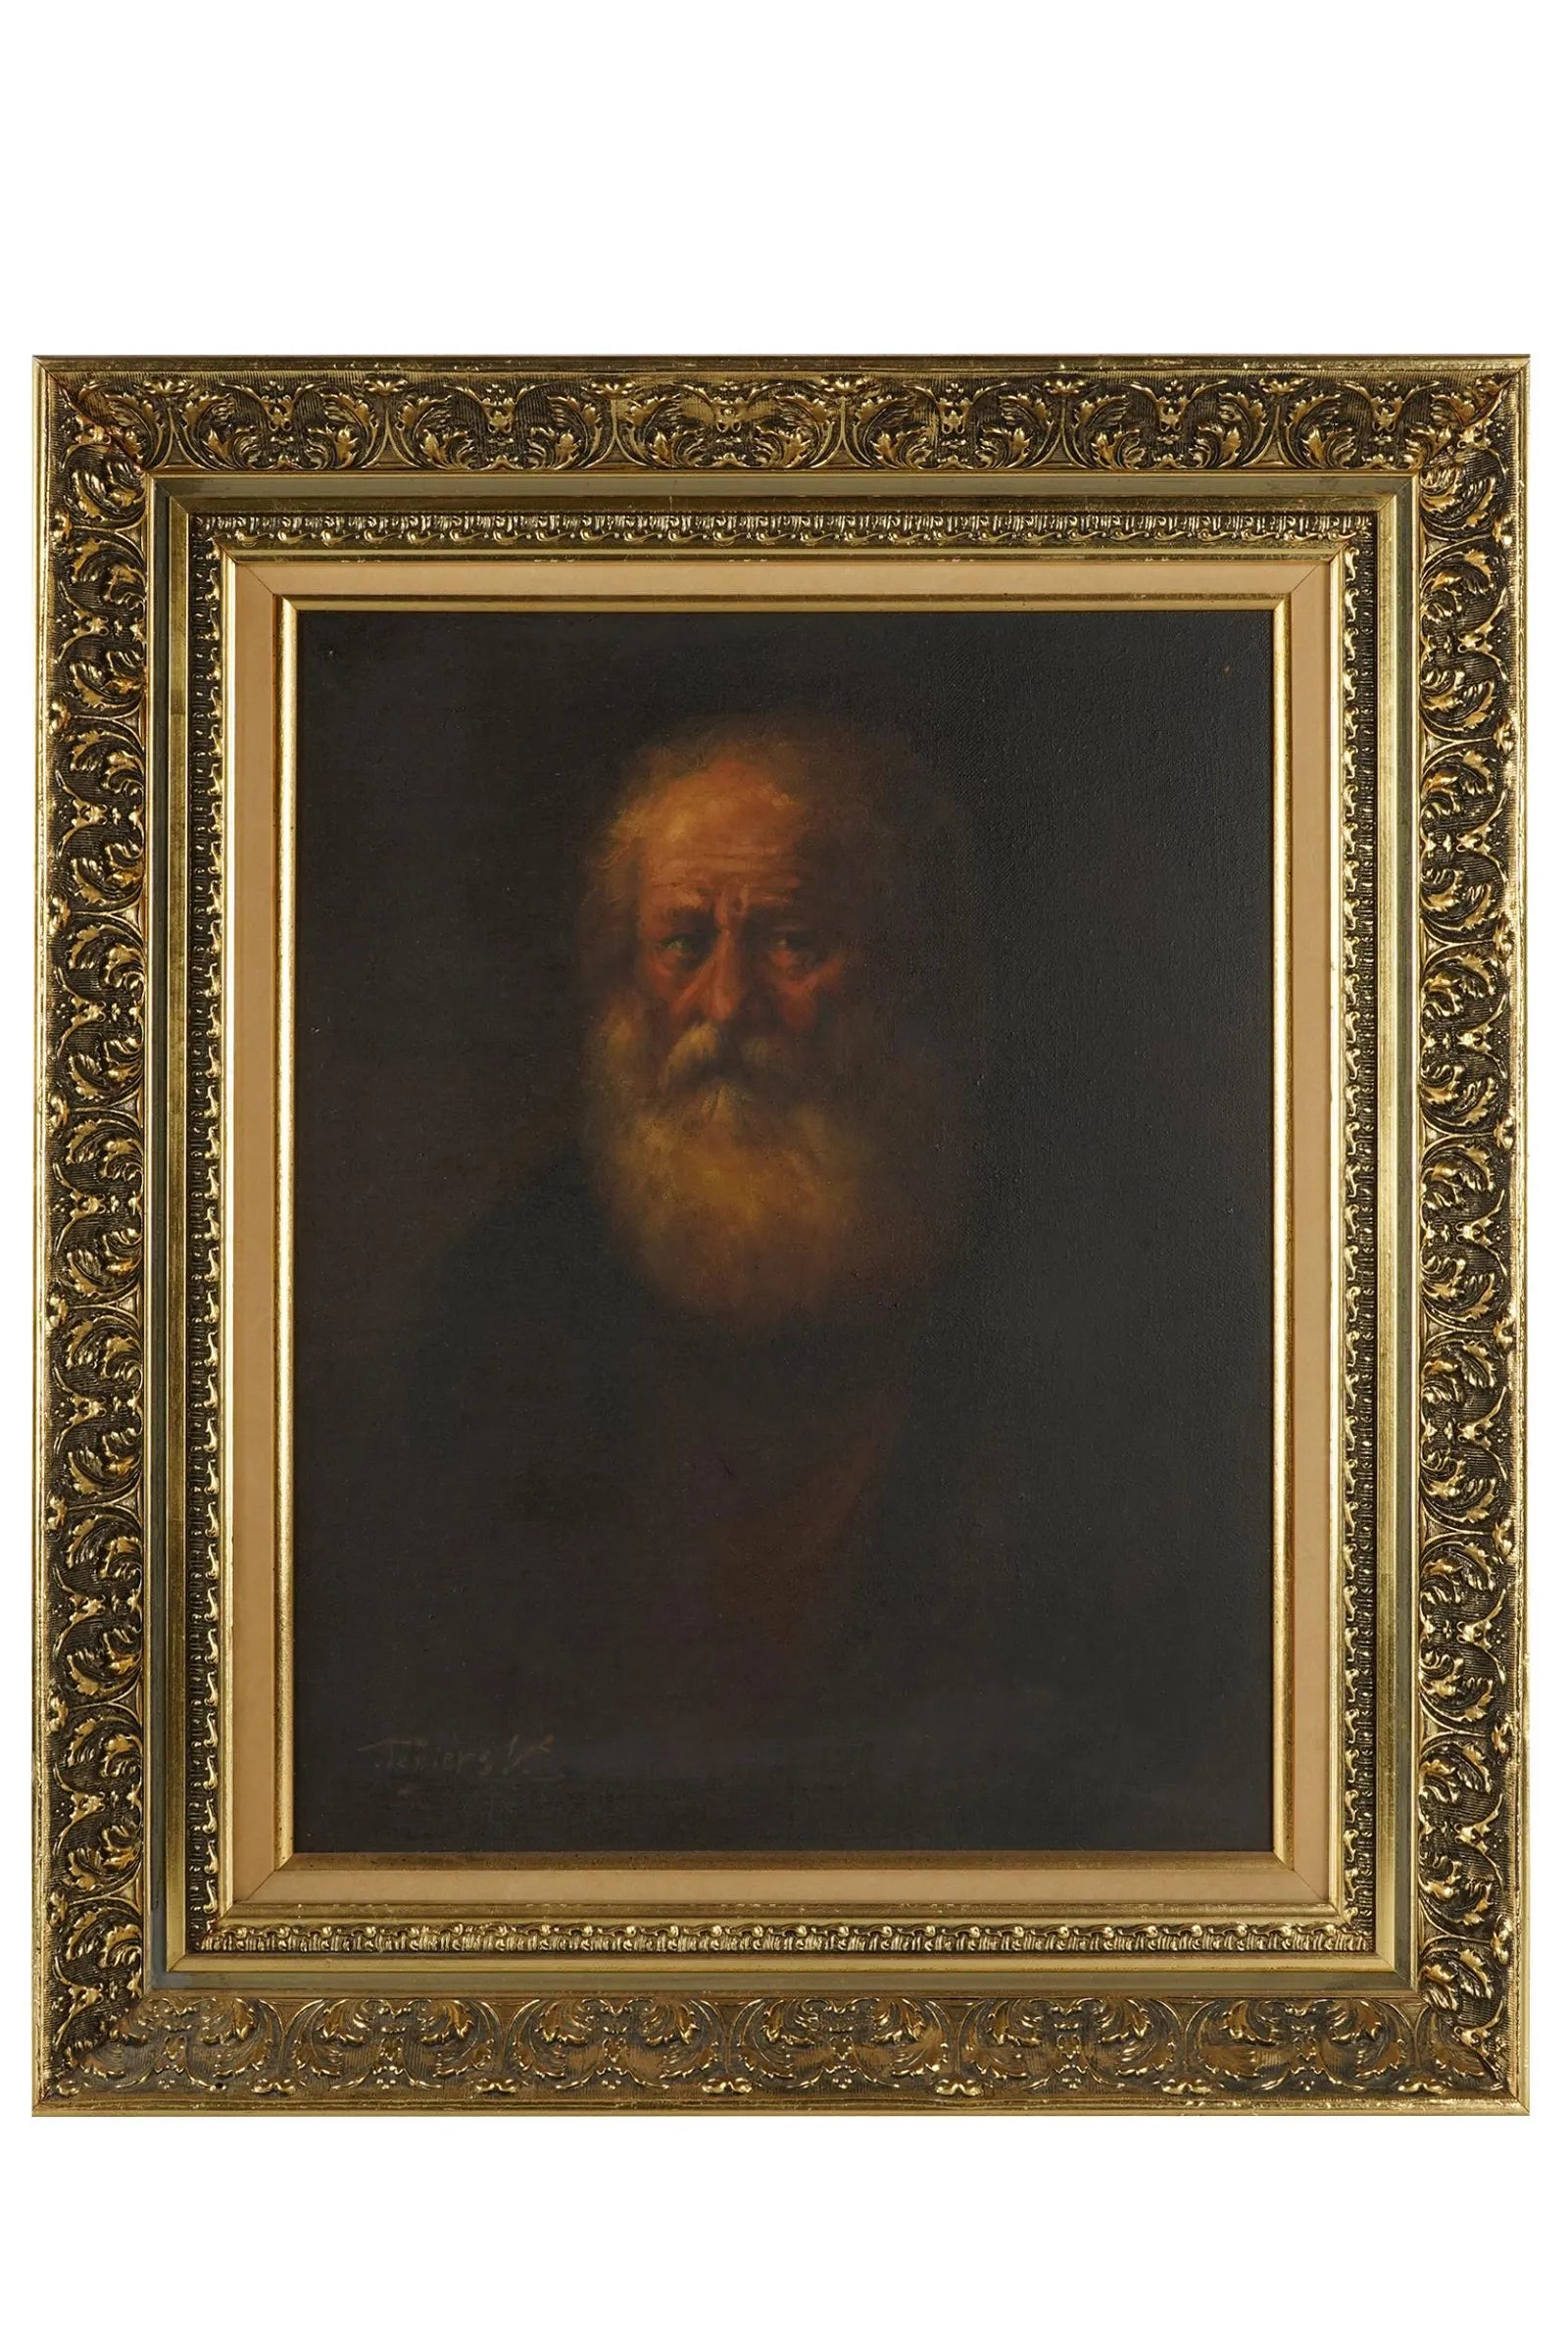 AW522 European School - Portrait of a Gentleman - Oil on Canvas - Signed Teniers V.